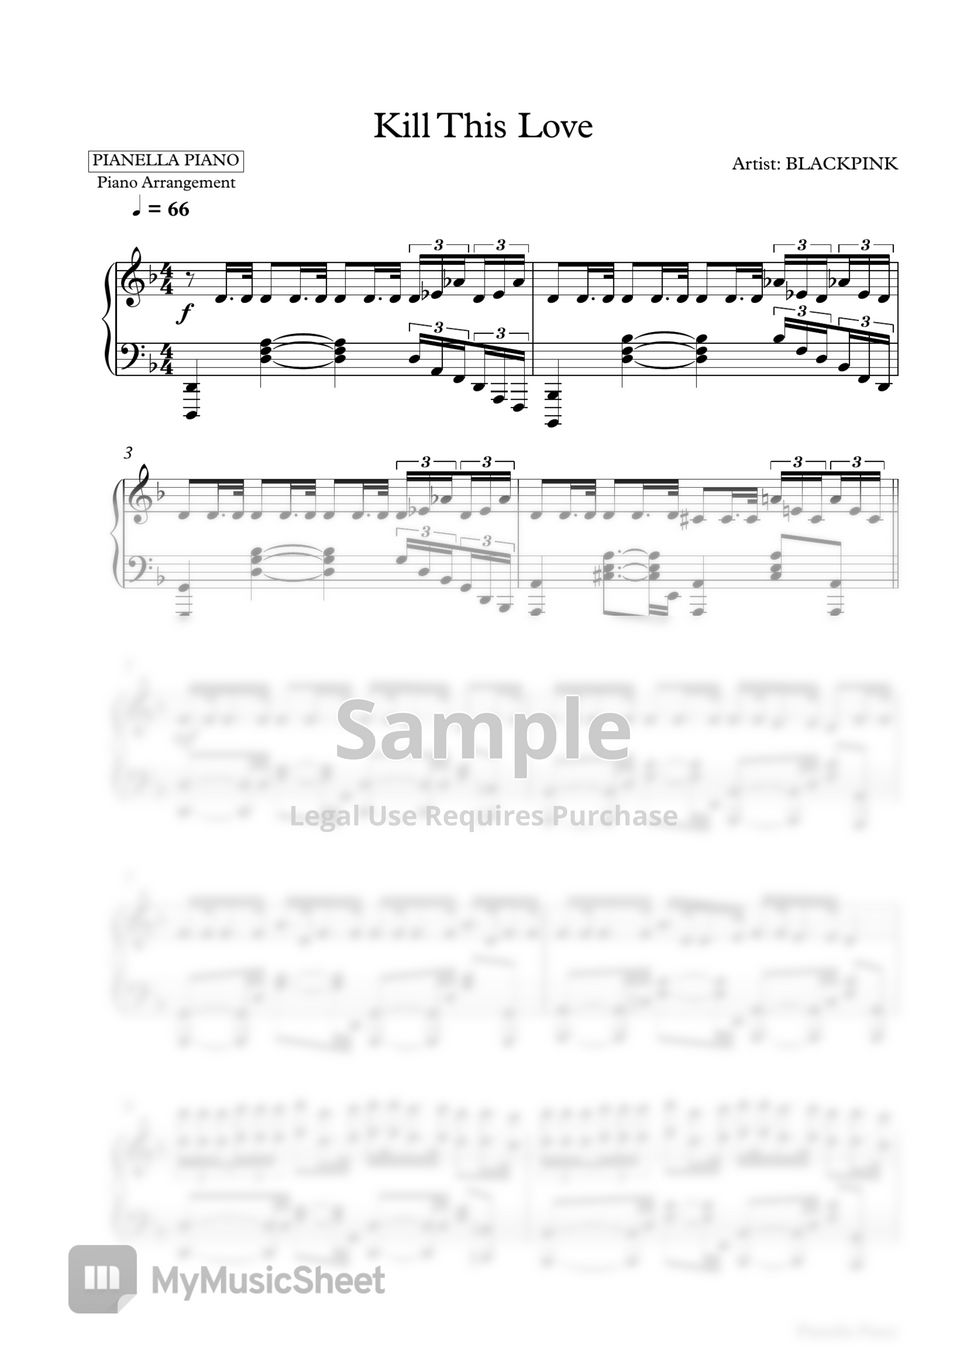 BLACKPINK - KILL THIS LOVE (Piano Sheet) by Pianella Piano